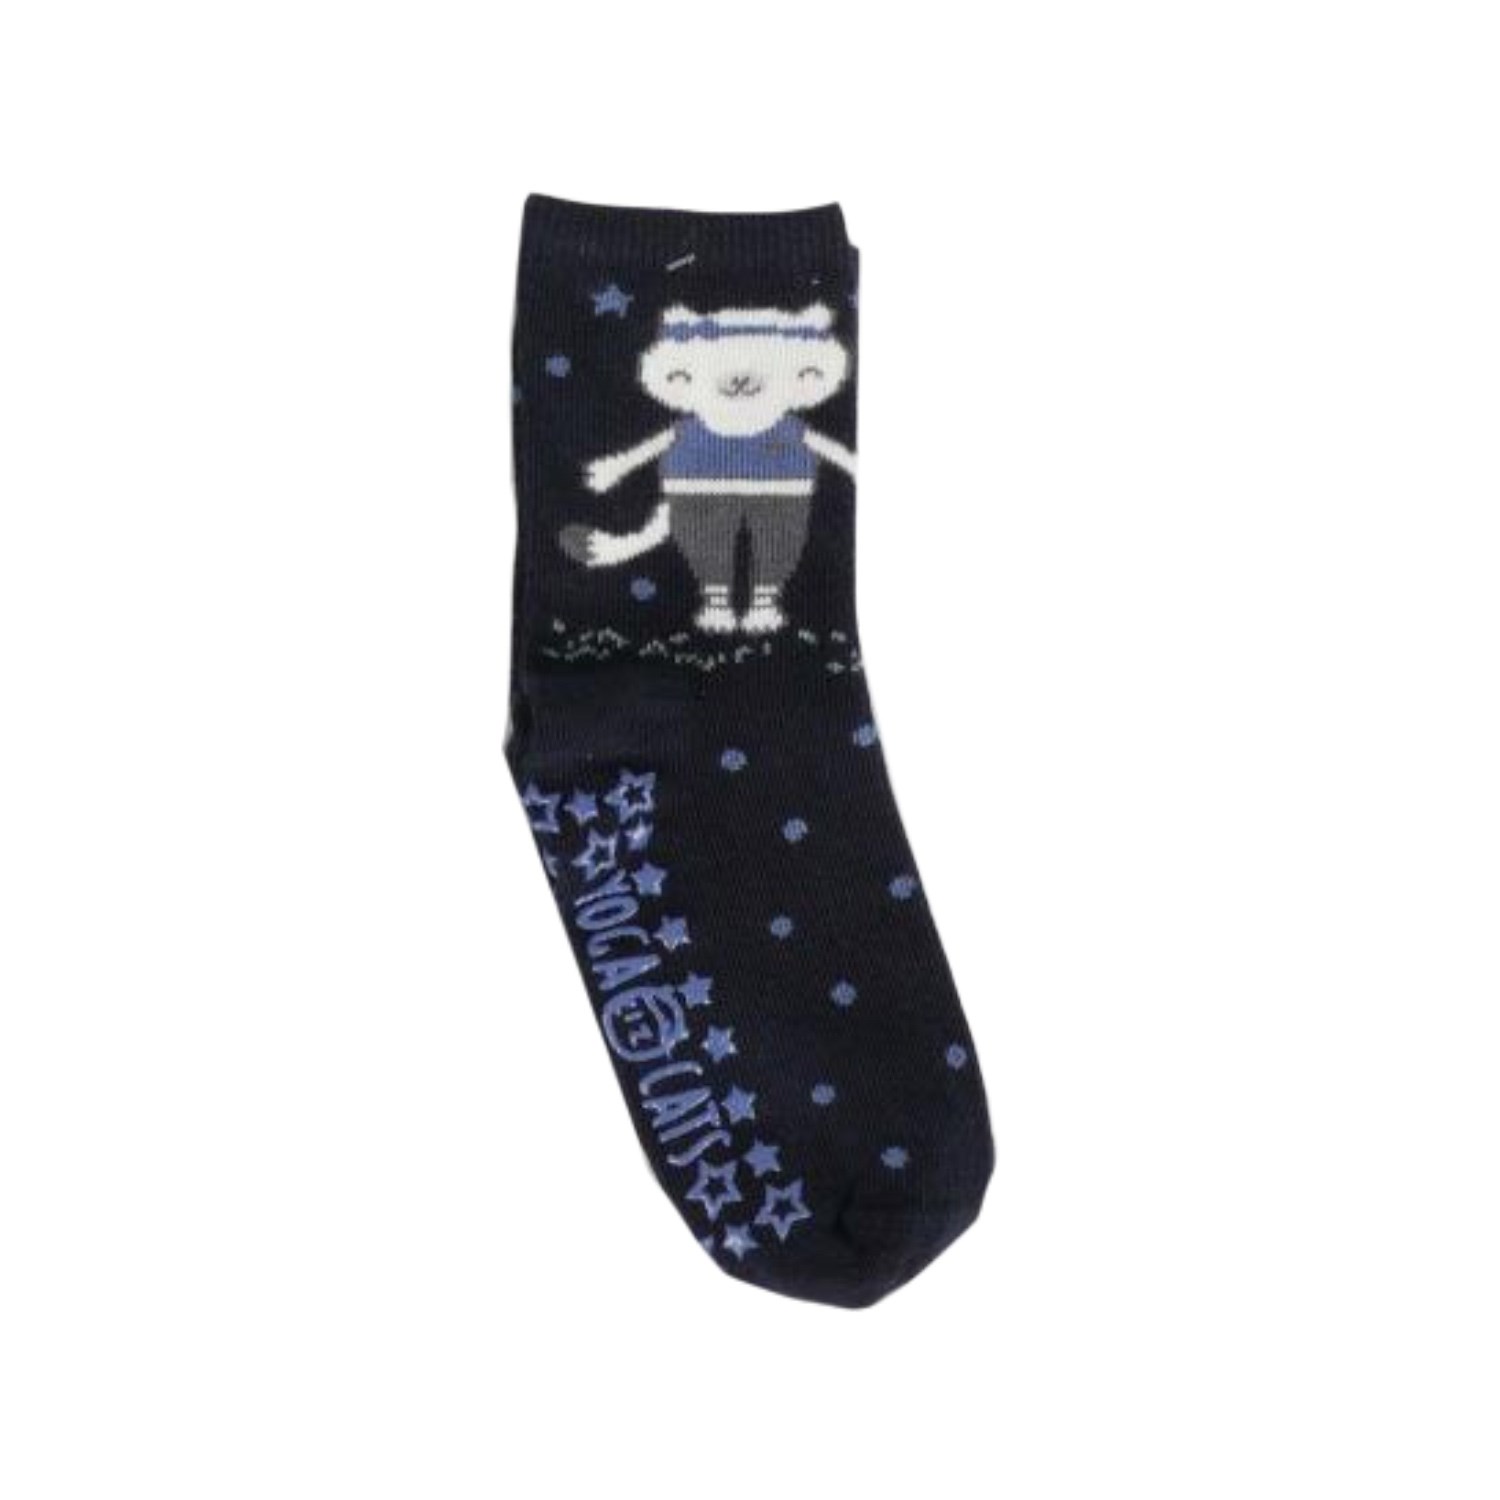 Katamino Wroom Abs'li Kız Bebek Çorabı K20261 Siyah